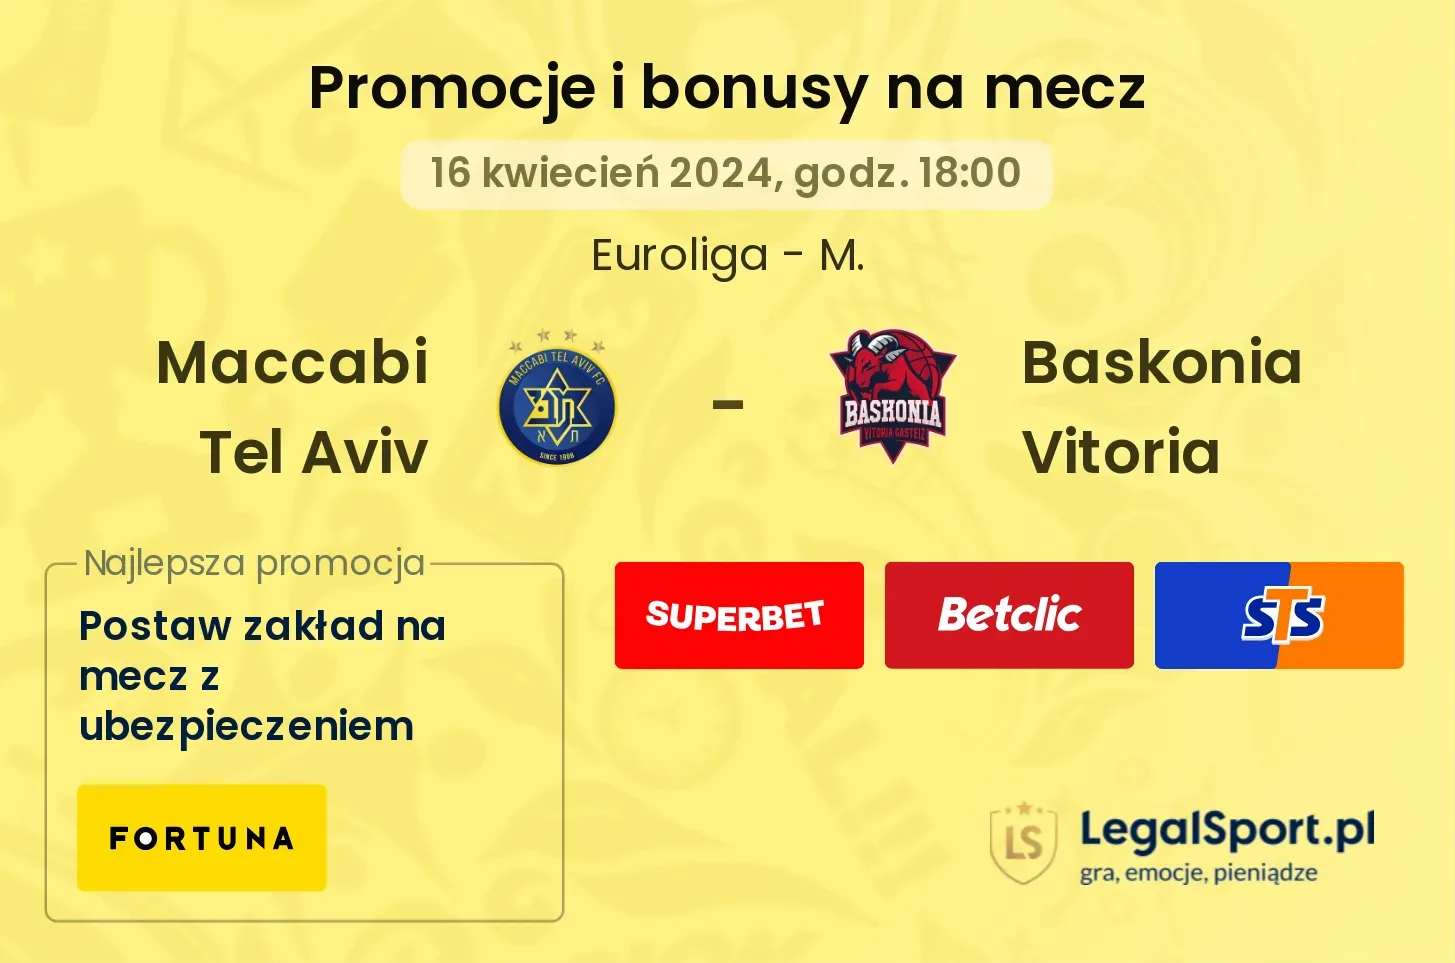 Maccabi Tel Aviv - Baskonia Vitoria promocje bonusy na mecz